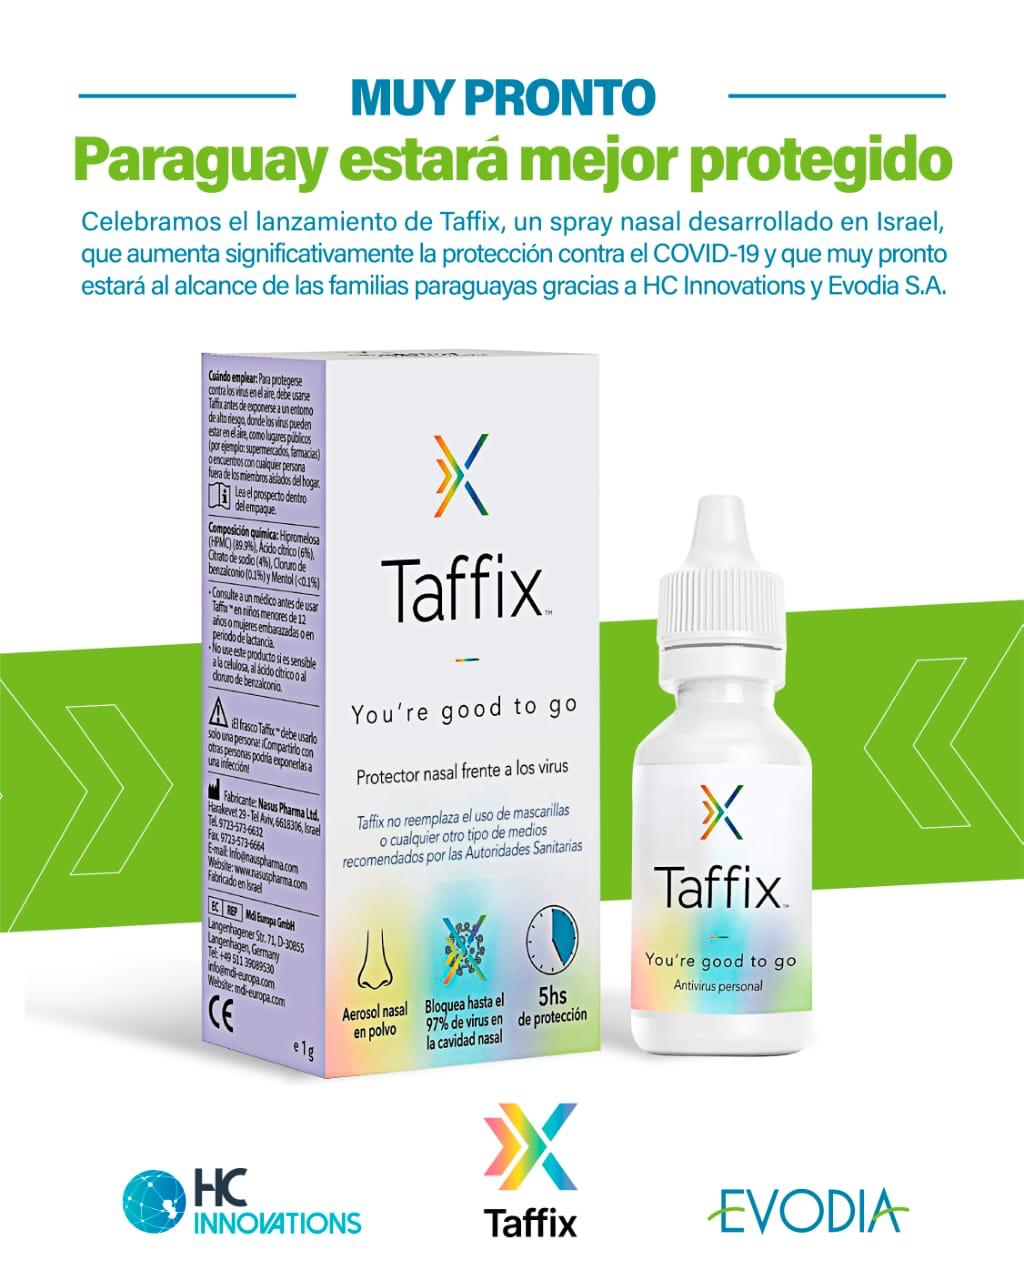 HC Innovations traerá a Paraguay el inhalador nasal Taffix - Unicanal